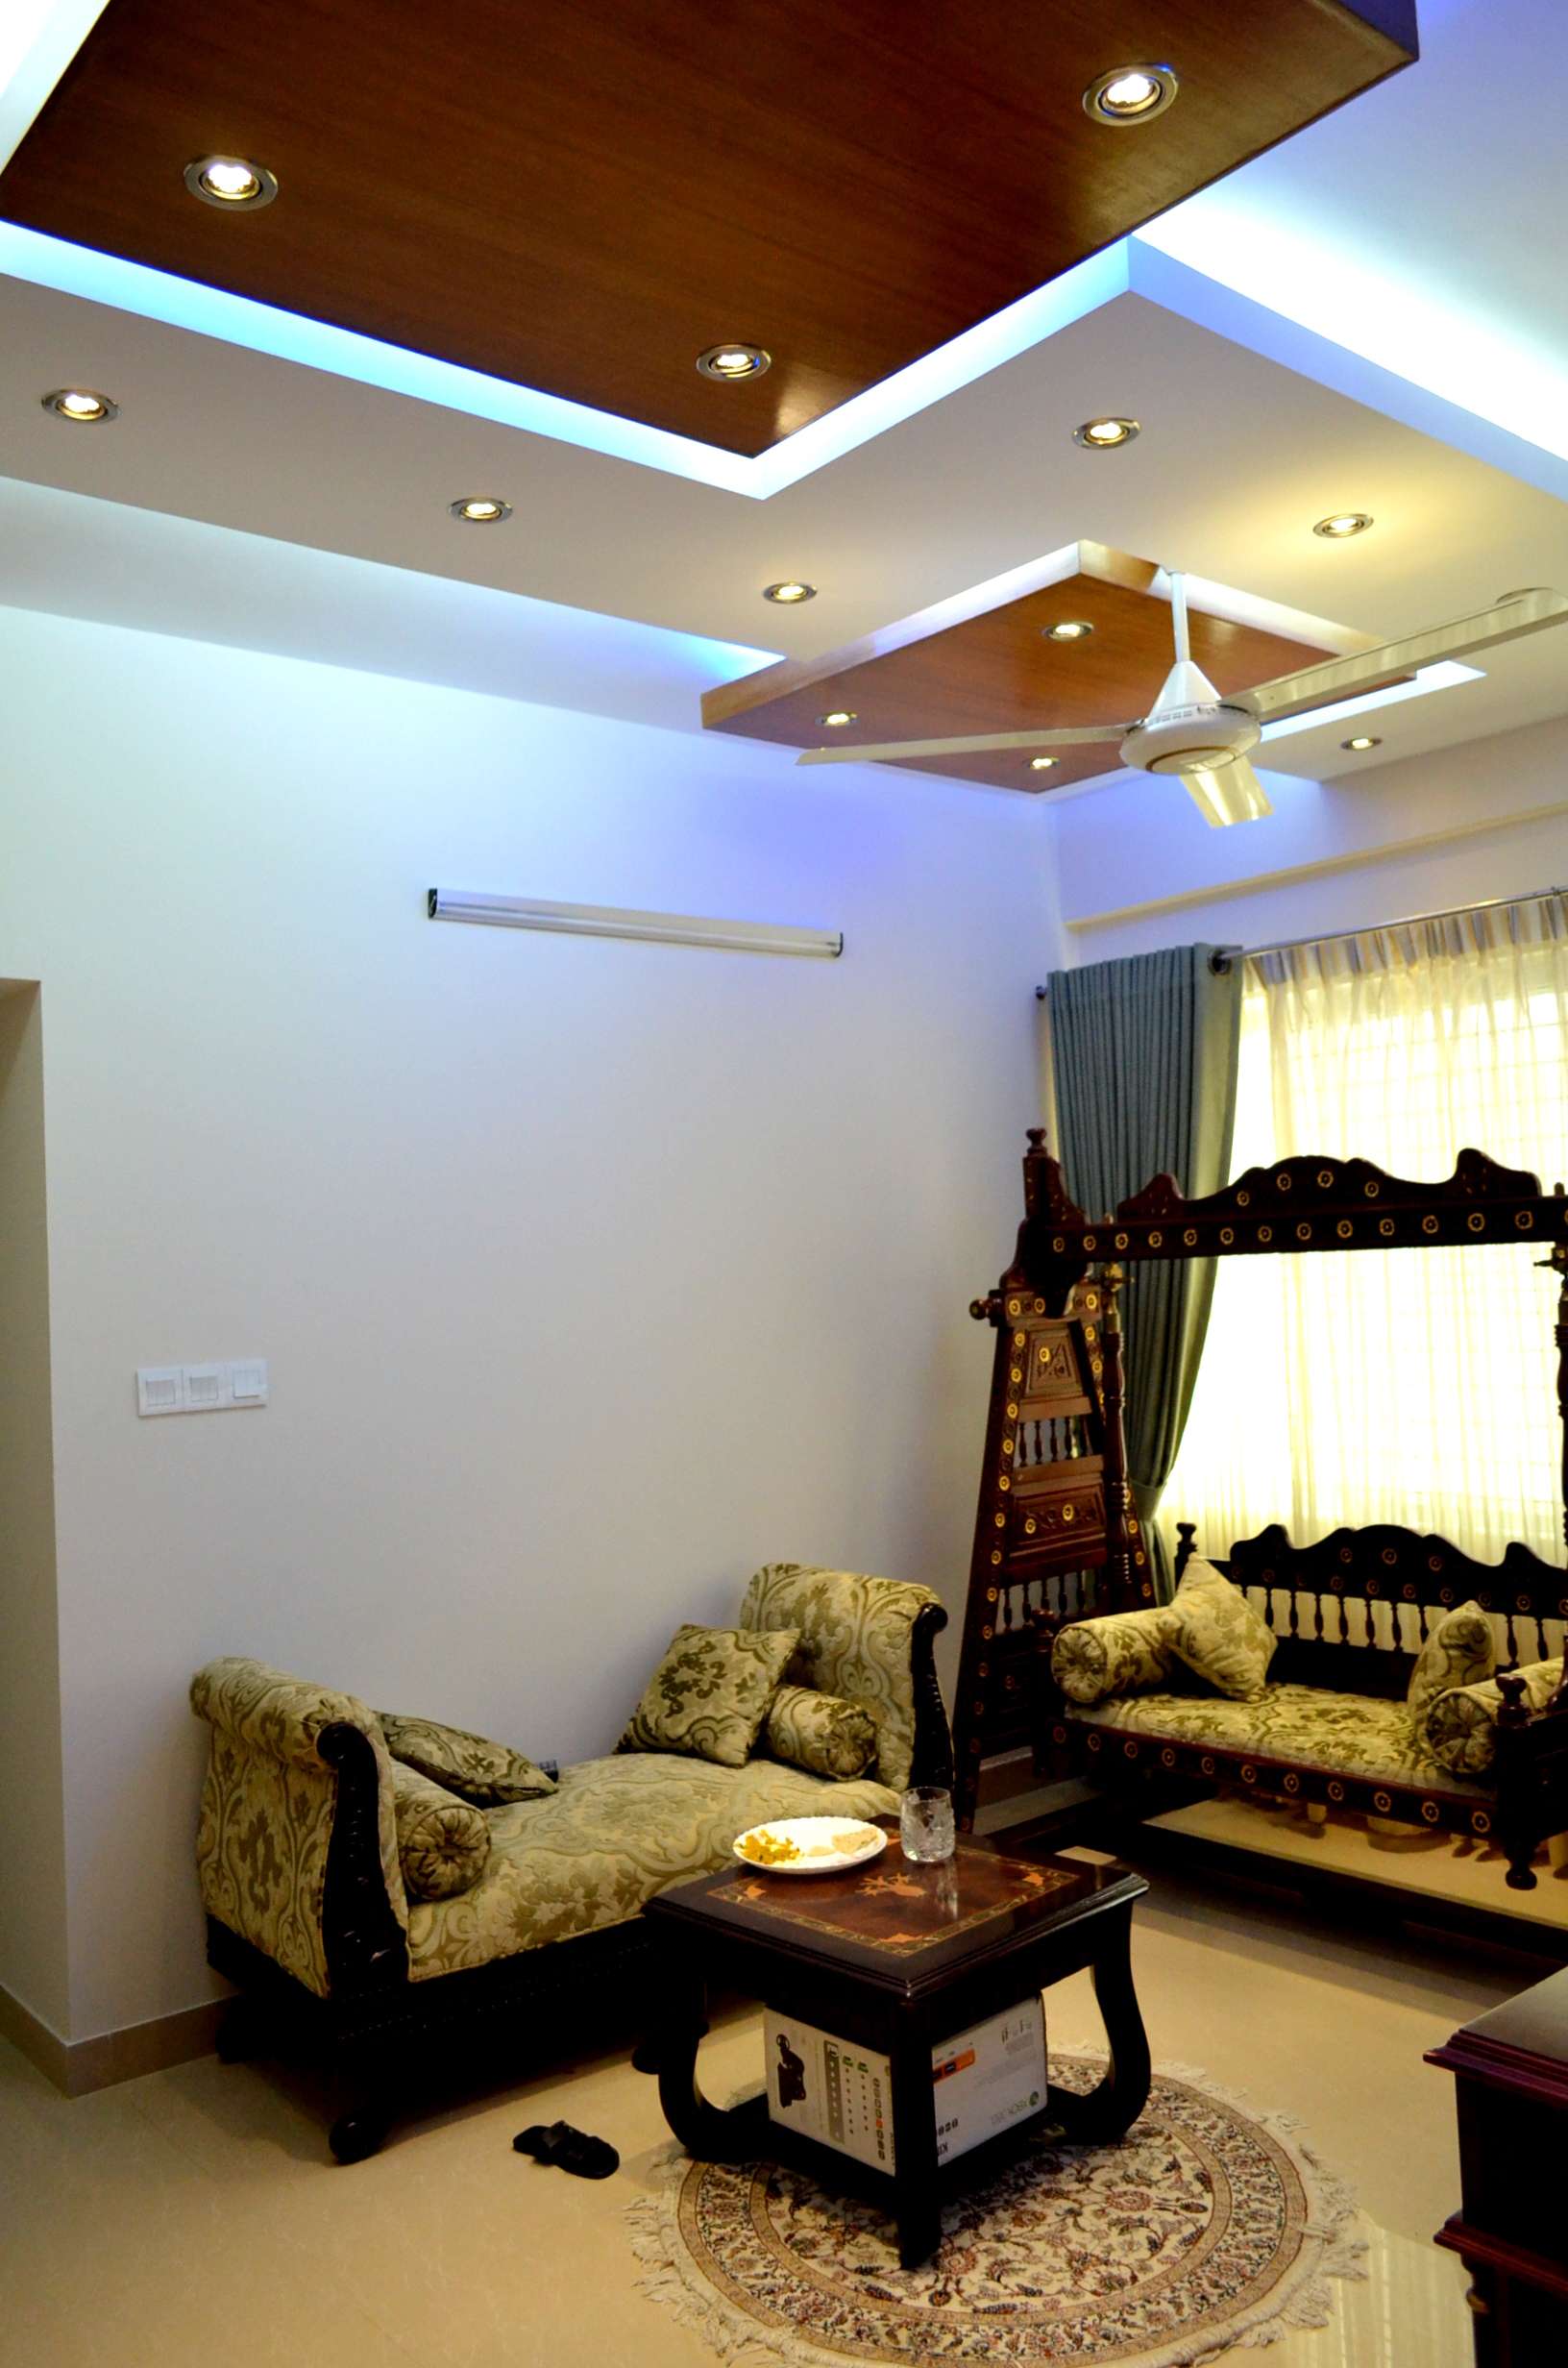 Masud Alam Dhanmondi Complete Project Drawing Room Interior Design (11)